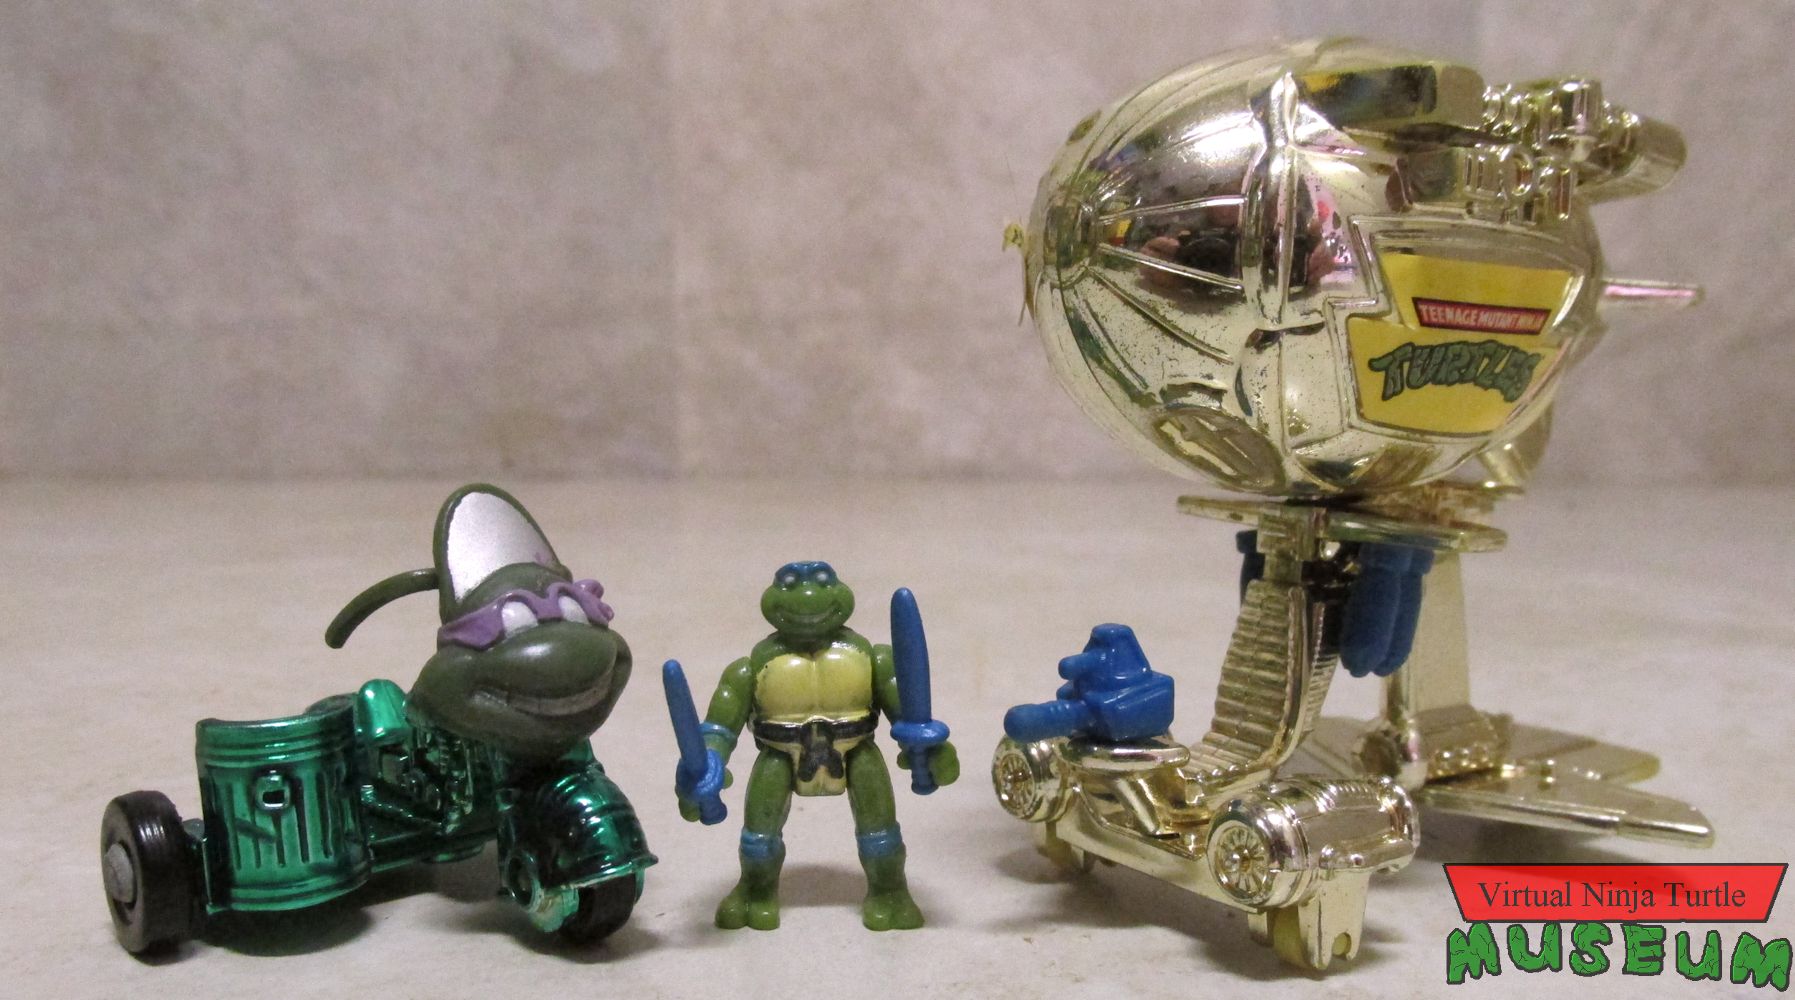 Metallized blimp, Turtlecycle and Toon Leonardo